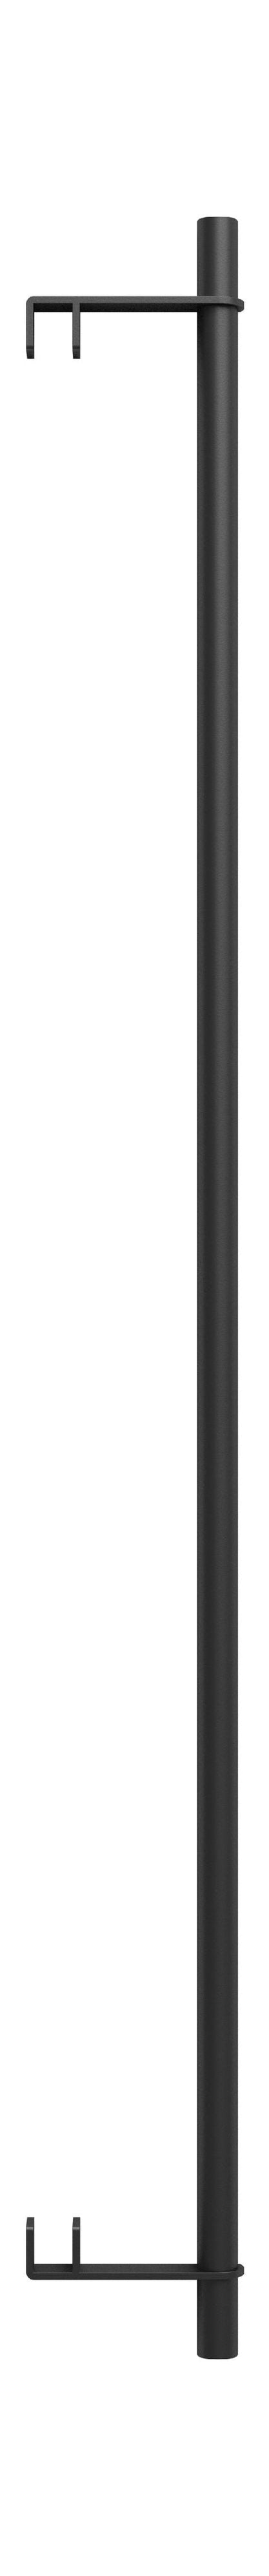 Moebe Splingsysteem/muurplanken kledingbar 85 cm, zwart